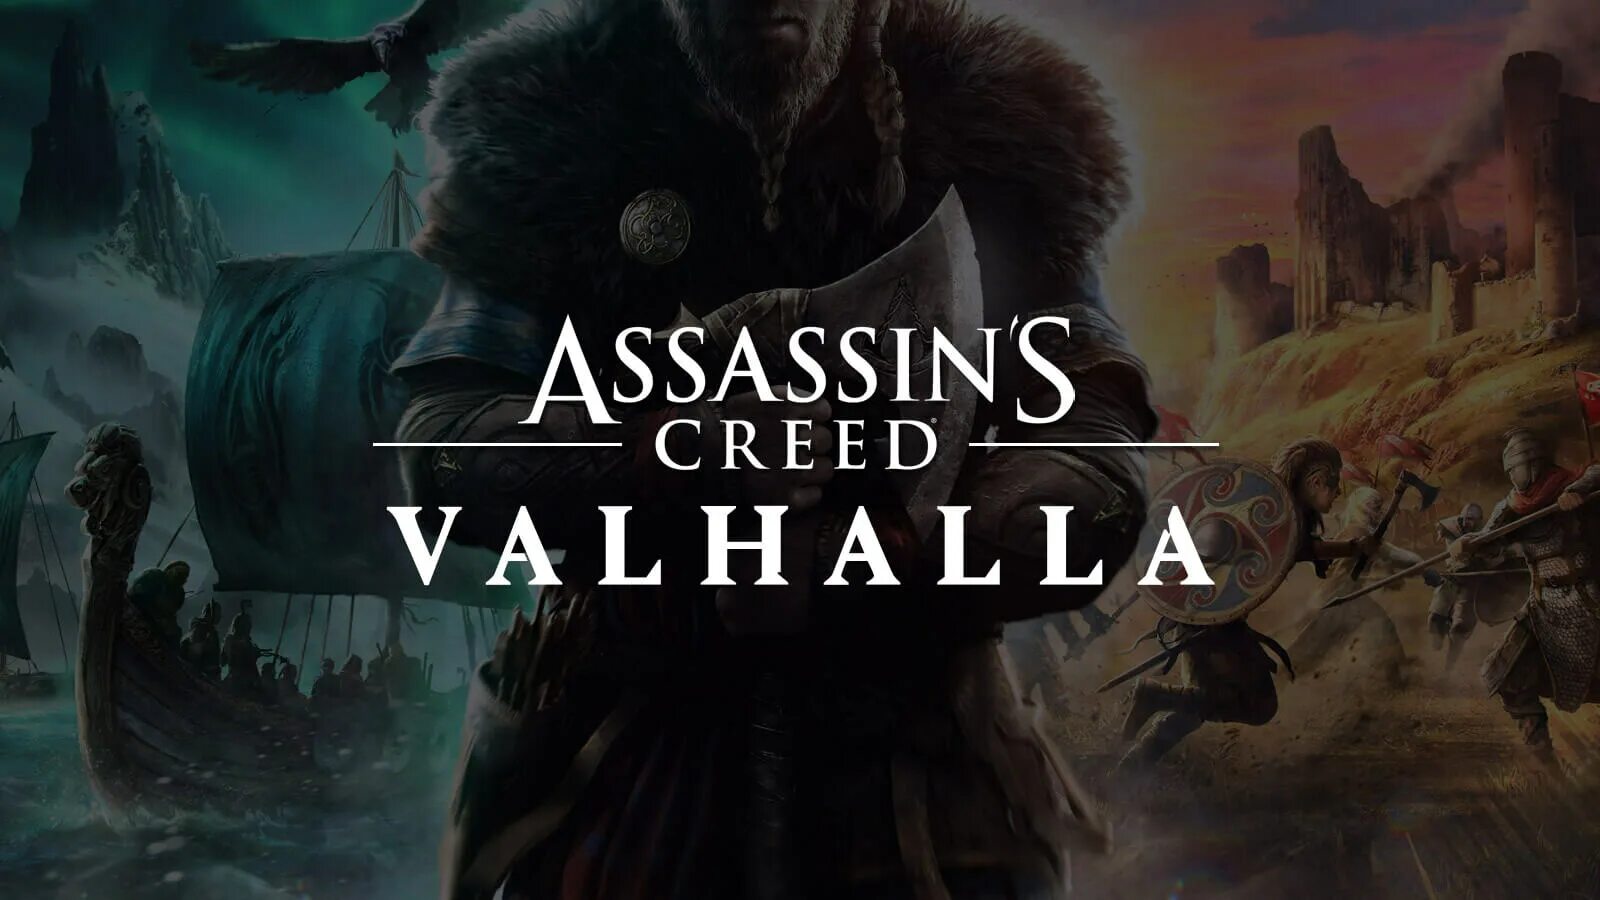 Валгалла игра ассасин. Ассасин Вальгалла стрим. Ассасин Крид Вальхалла стрим. Assassin's Creed Valhalla обложка игры.